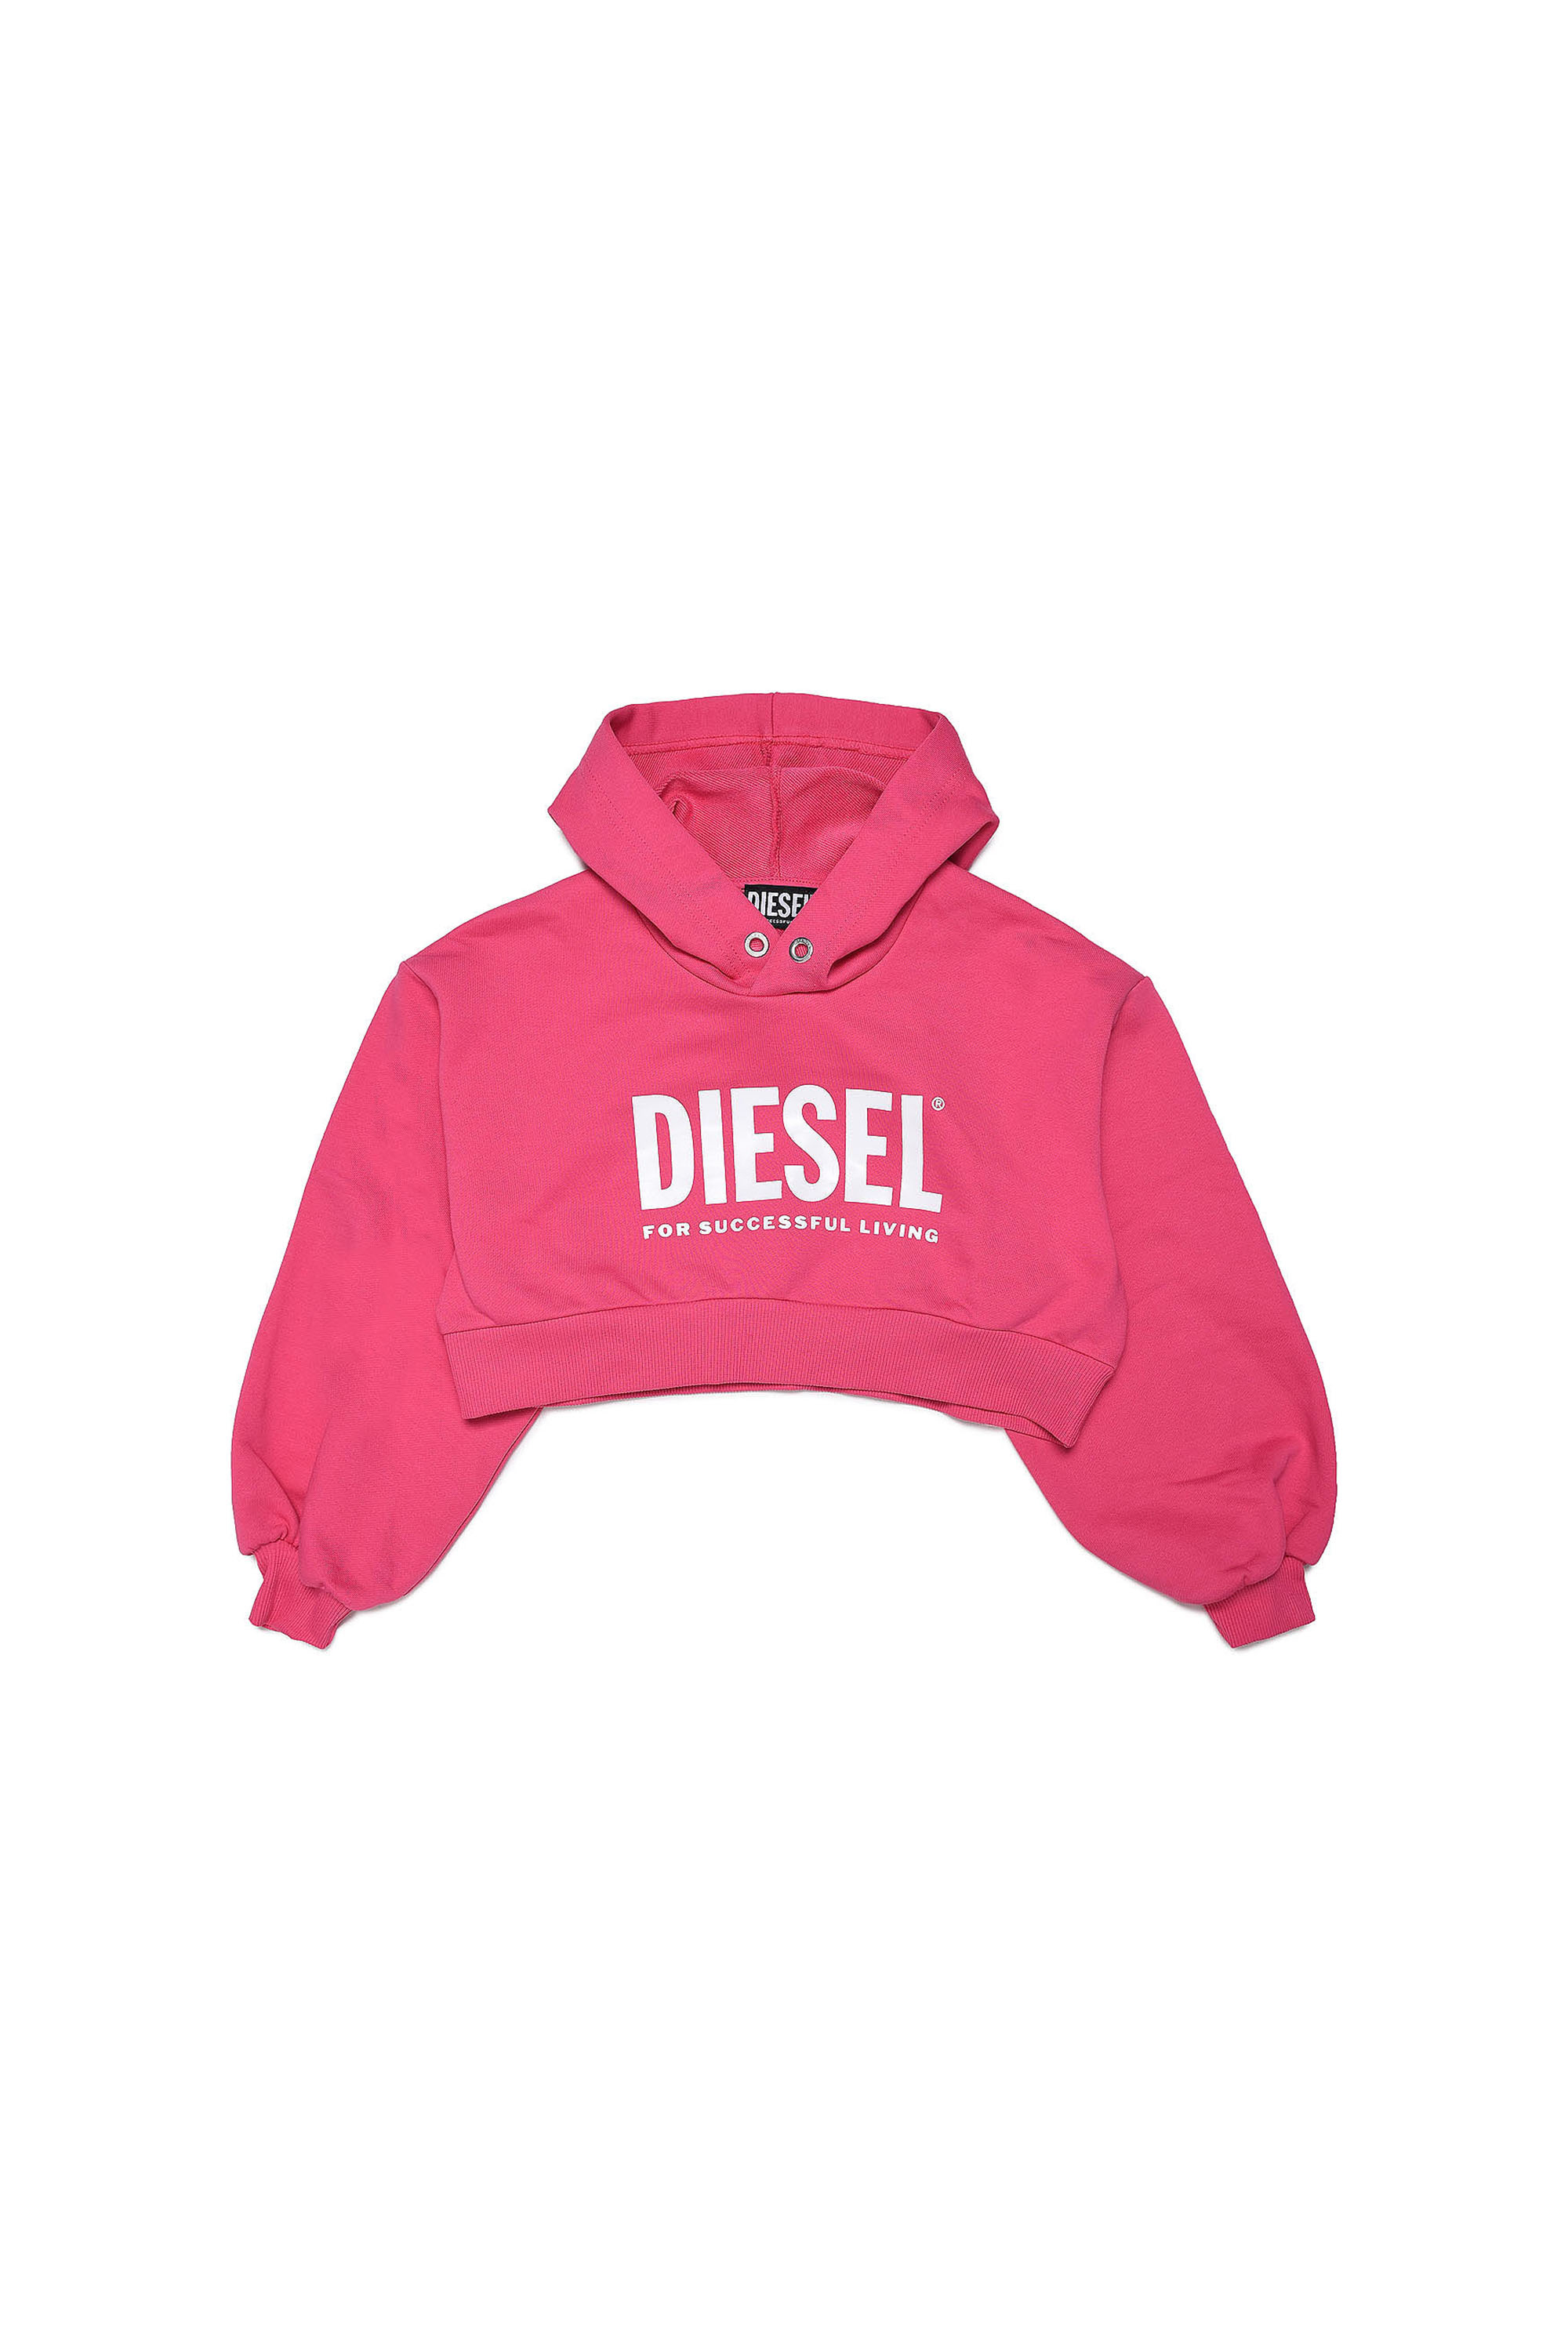 Diesel - SKRALOGO, Rosa - Image 1